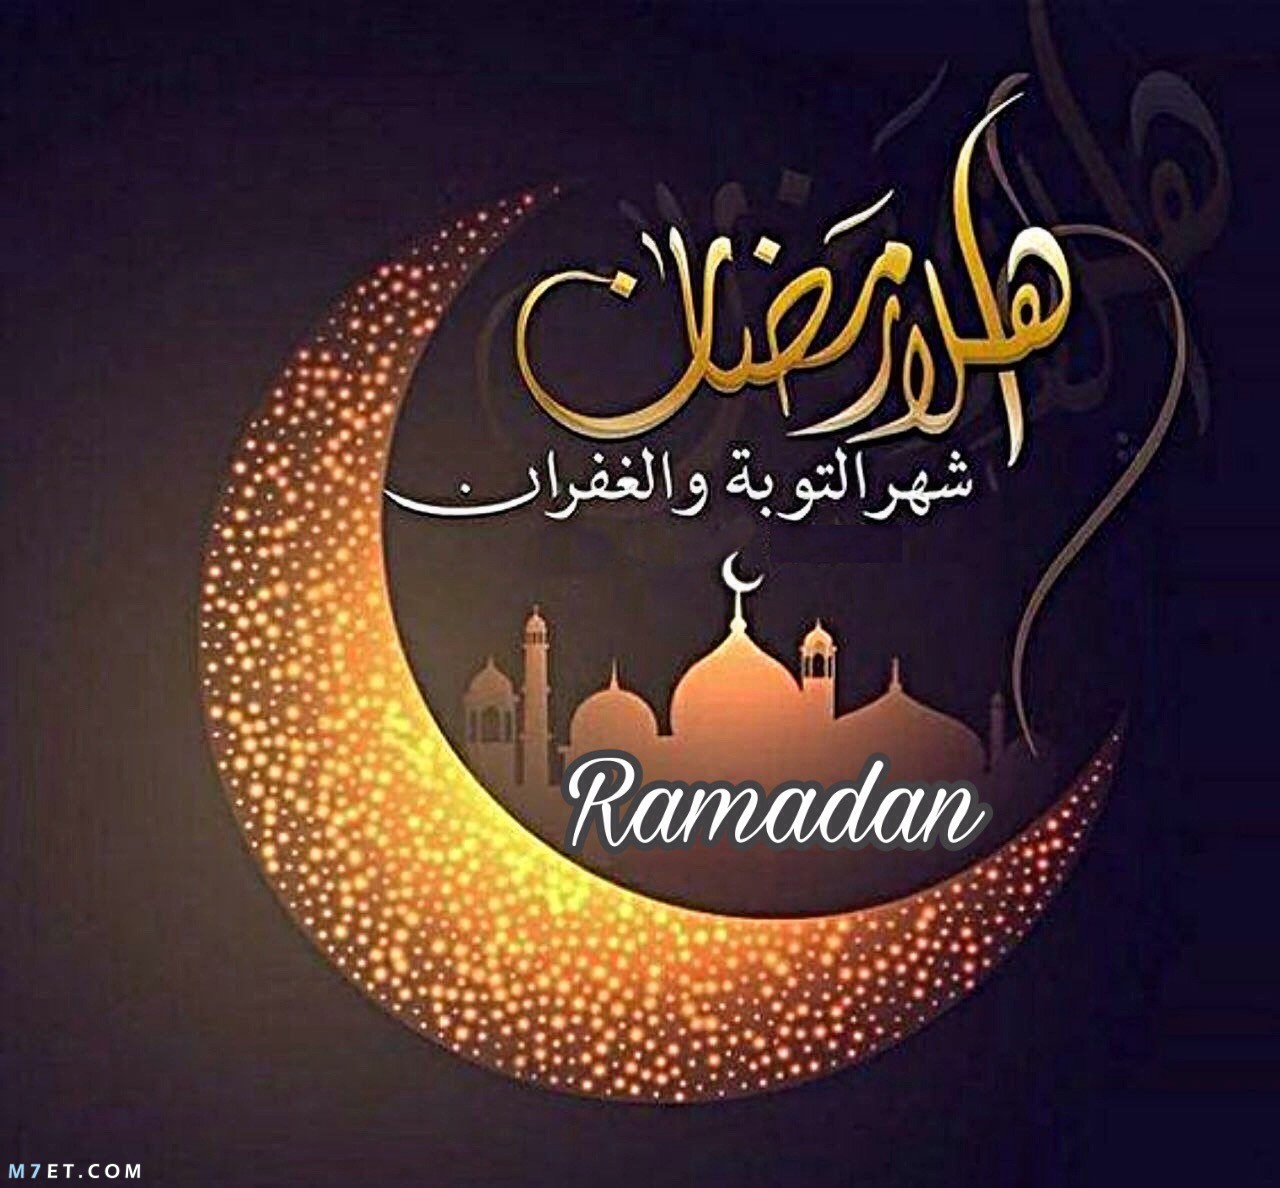 رمزيات عن رمضان